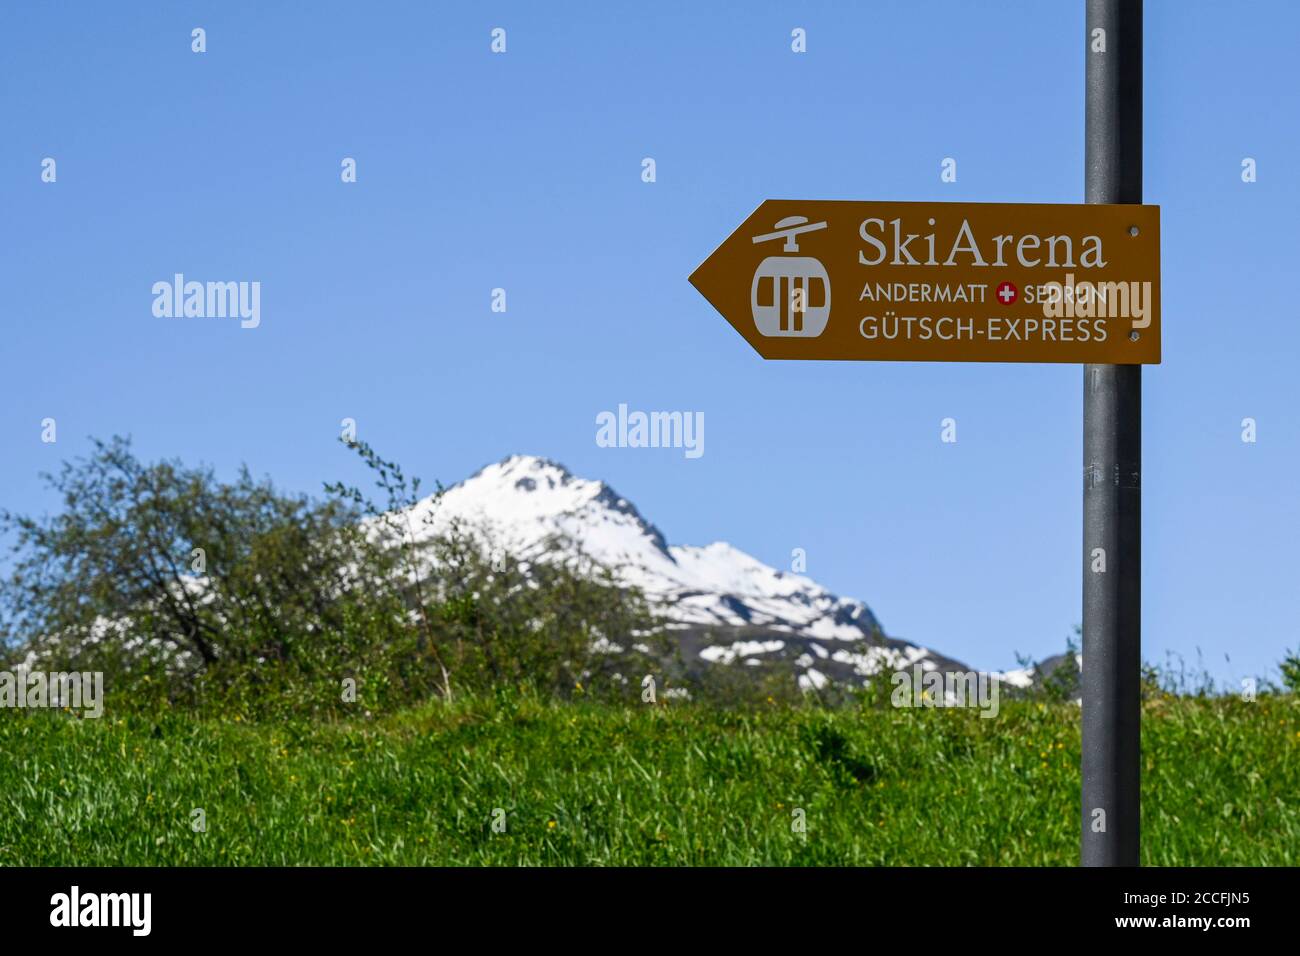 Wegweiser Ski Arena Andermatt, Sedrun, Gütsch Express, Schweiz Stockfoto